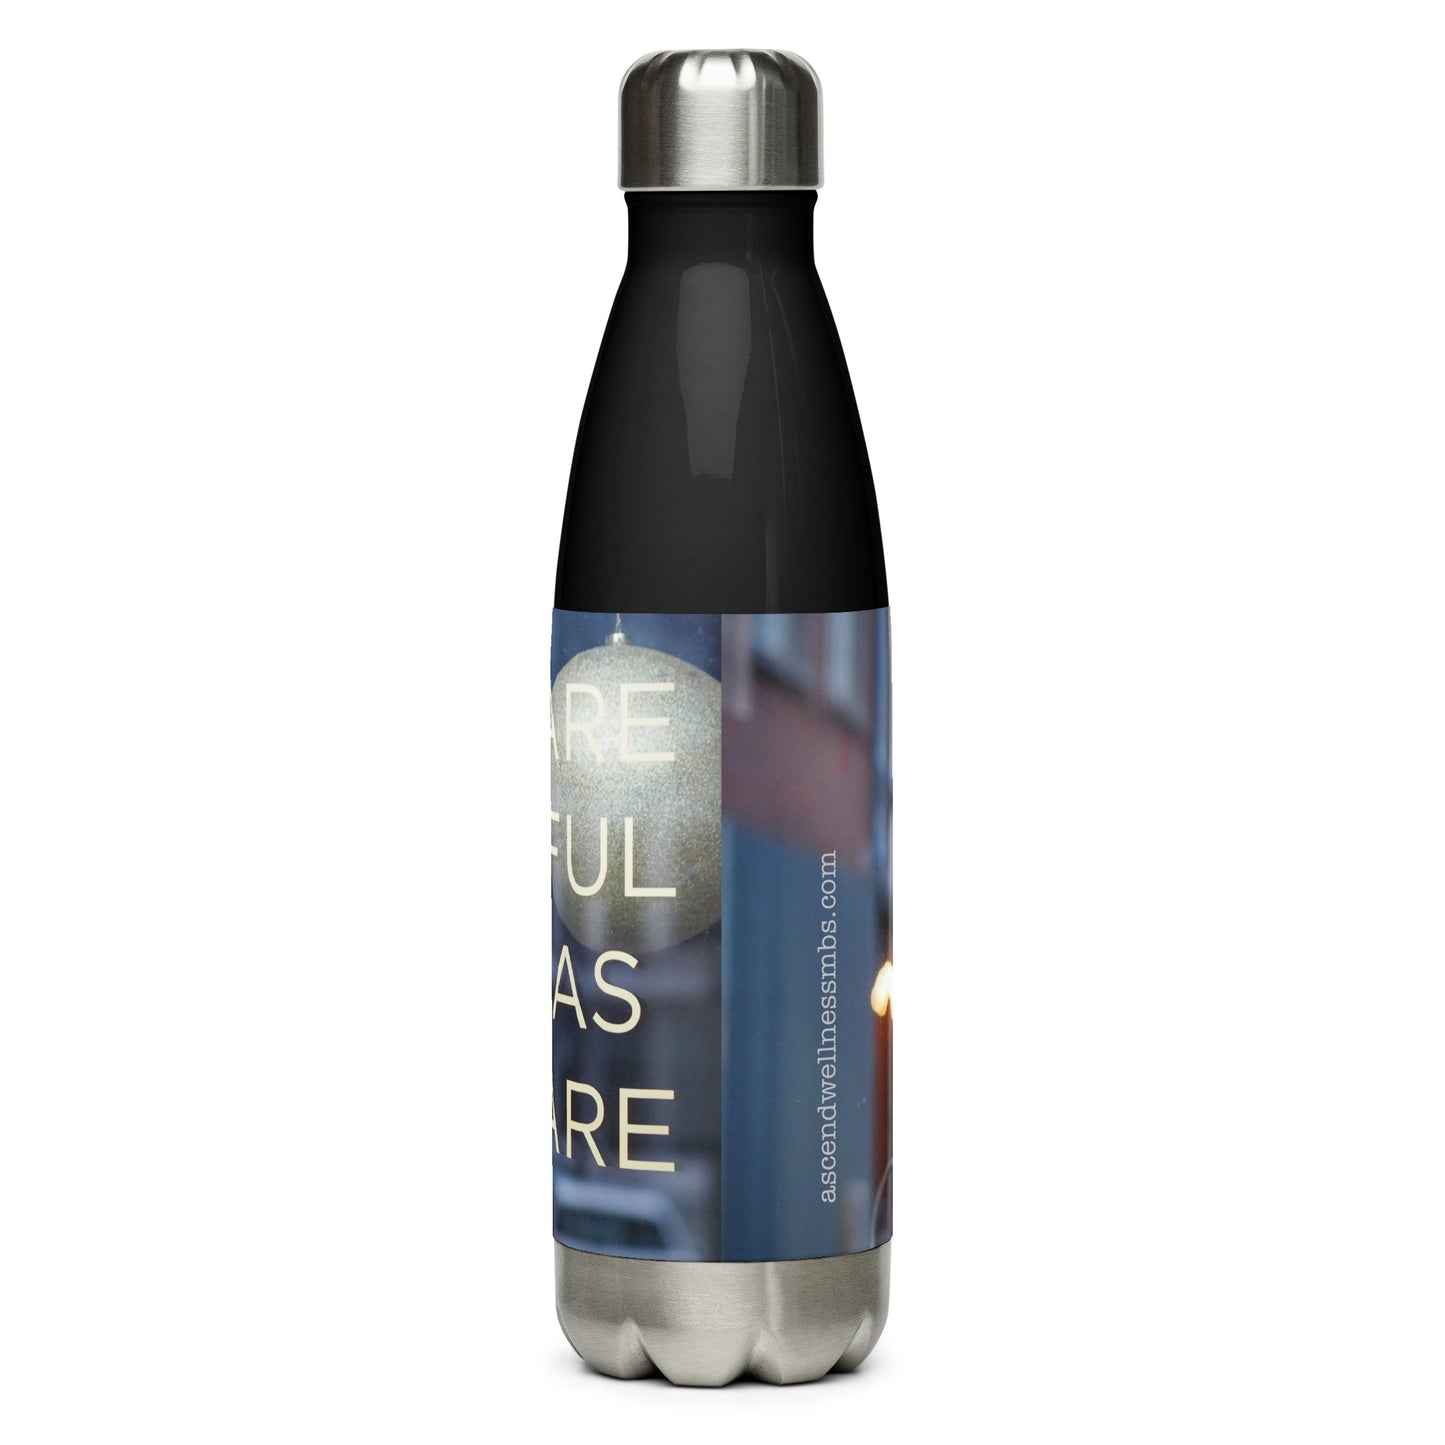 "Beautiful" Stainless Steel Water Bottle